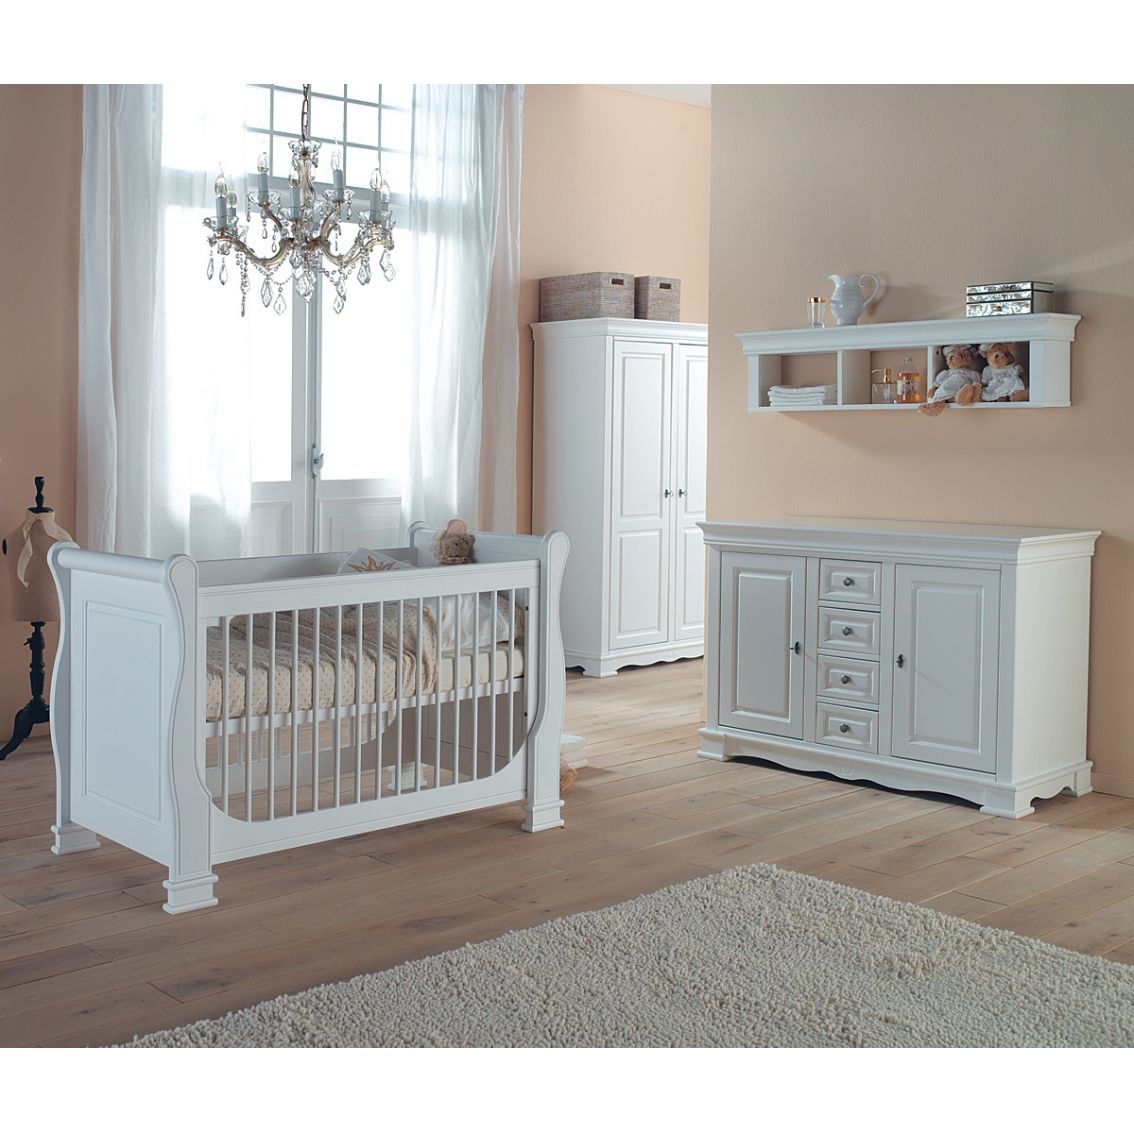 baby nursery furniture sets wooden : get really magical ideas baby | nursery WBLSKMD